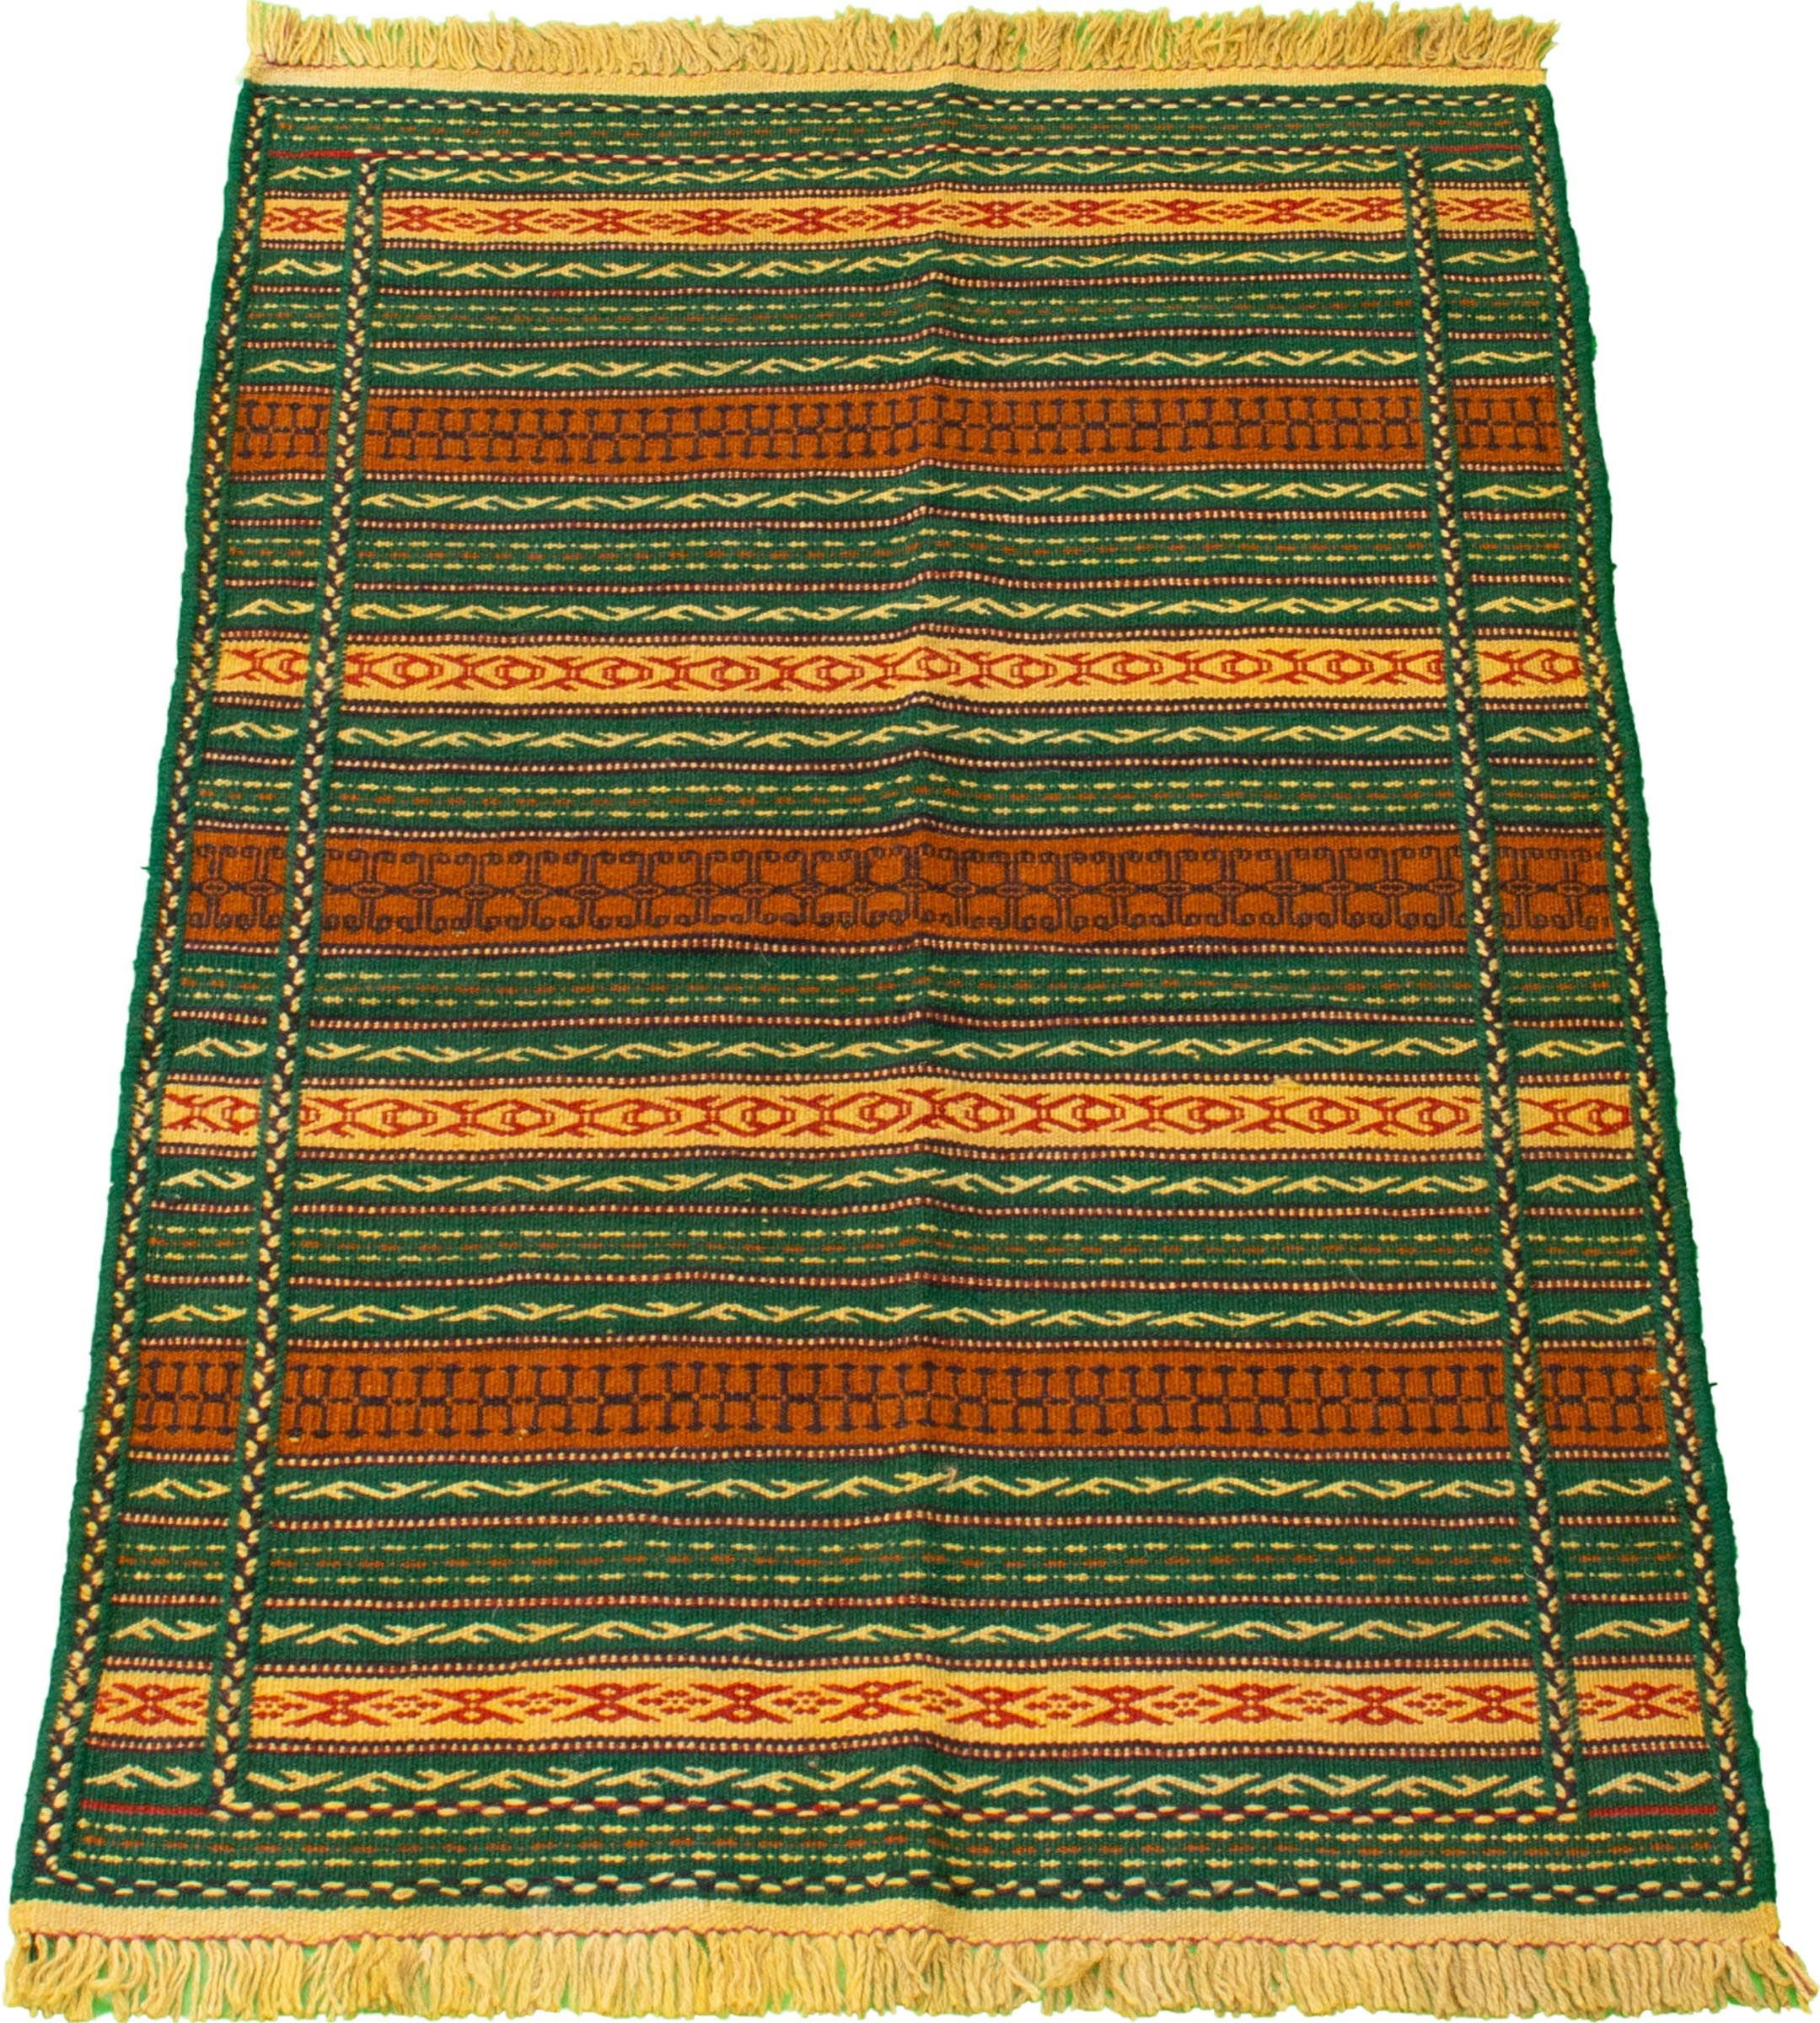 Ottoman Kashkoli Bordered Red Tapestry Kilim 3'3 x 5'1 Hand-Knotted Wool Rug eCarpet Gallery Area Rug for Living Room Bedroom 334637 